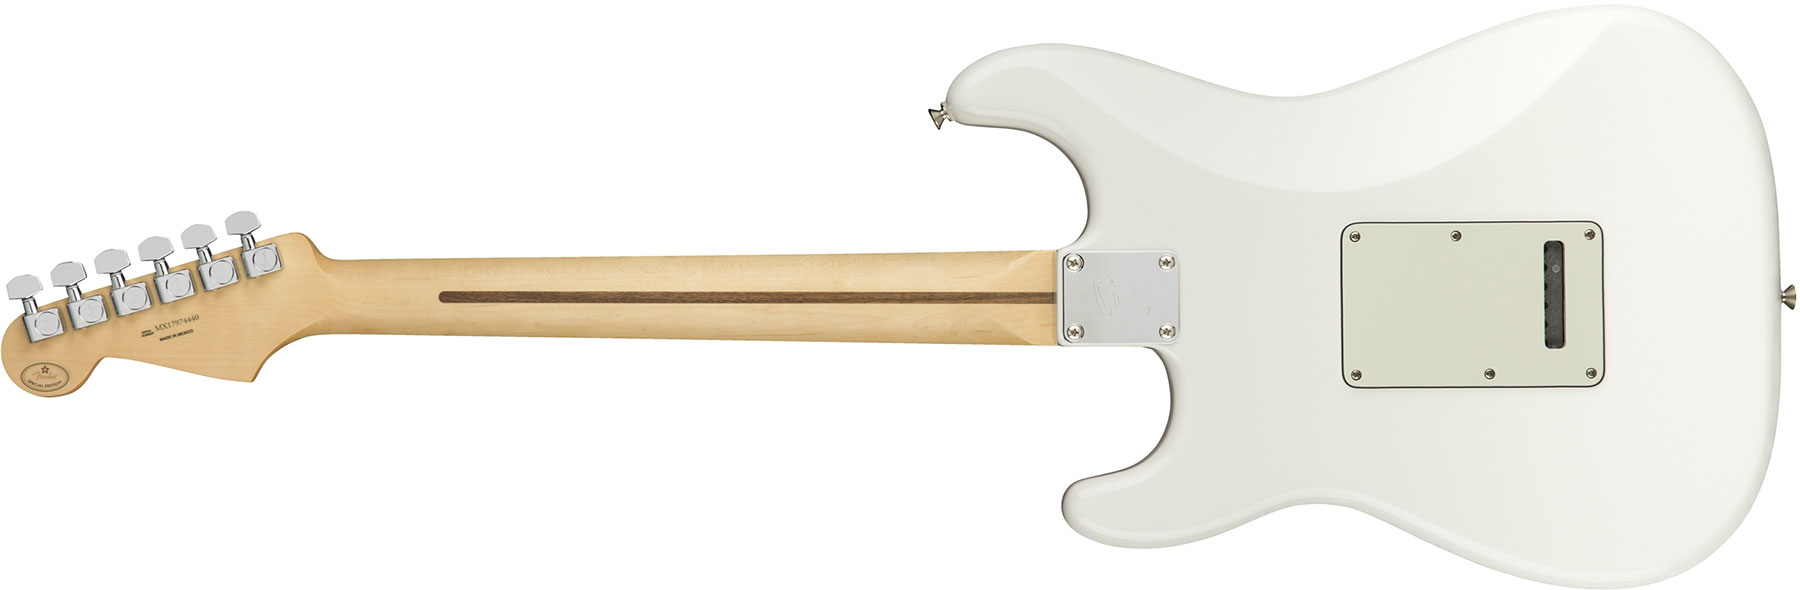 Fender Strat Player Mex Hss Pf - Polar White - Str shape electric guitar - Variation 1